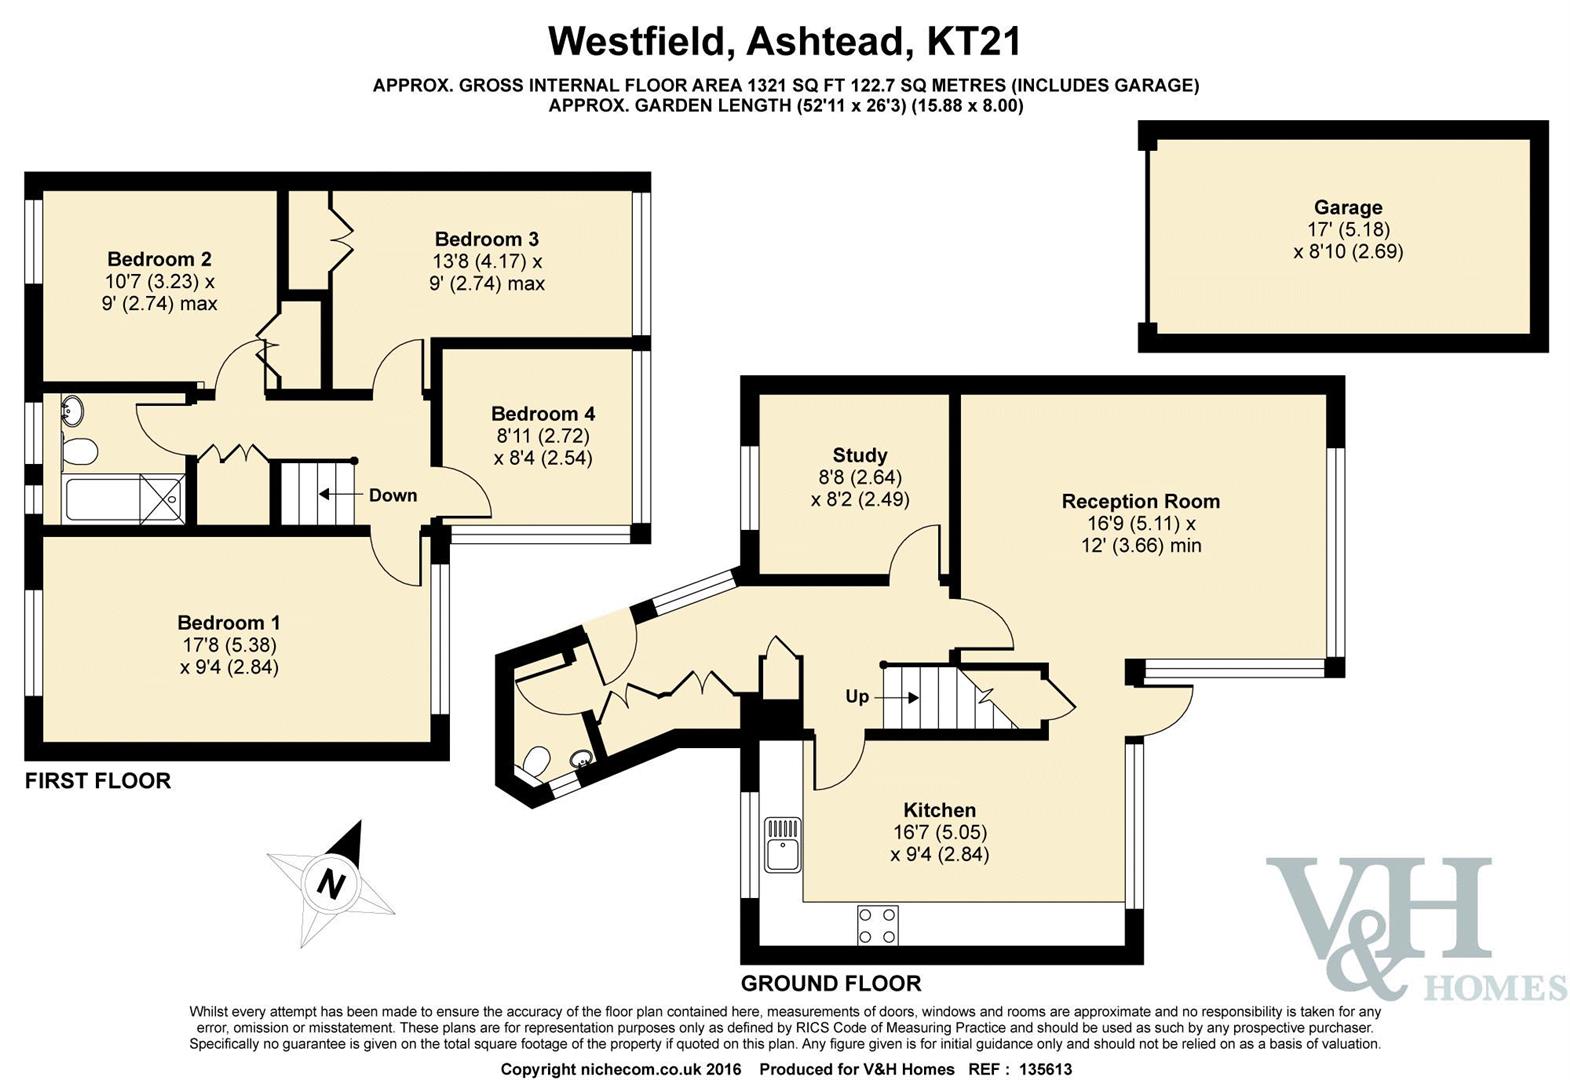 4 Bedrooms Detached house to rent in Westfield, Ashtead KT21